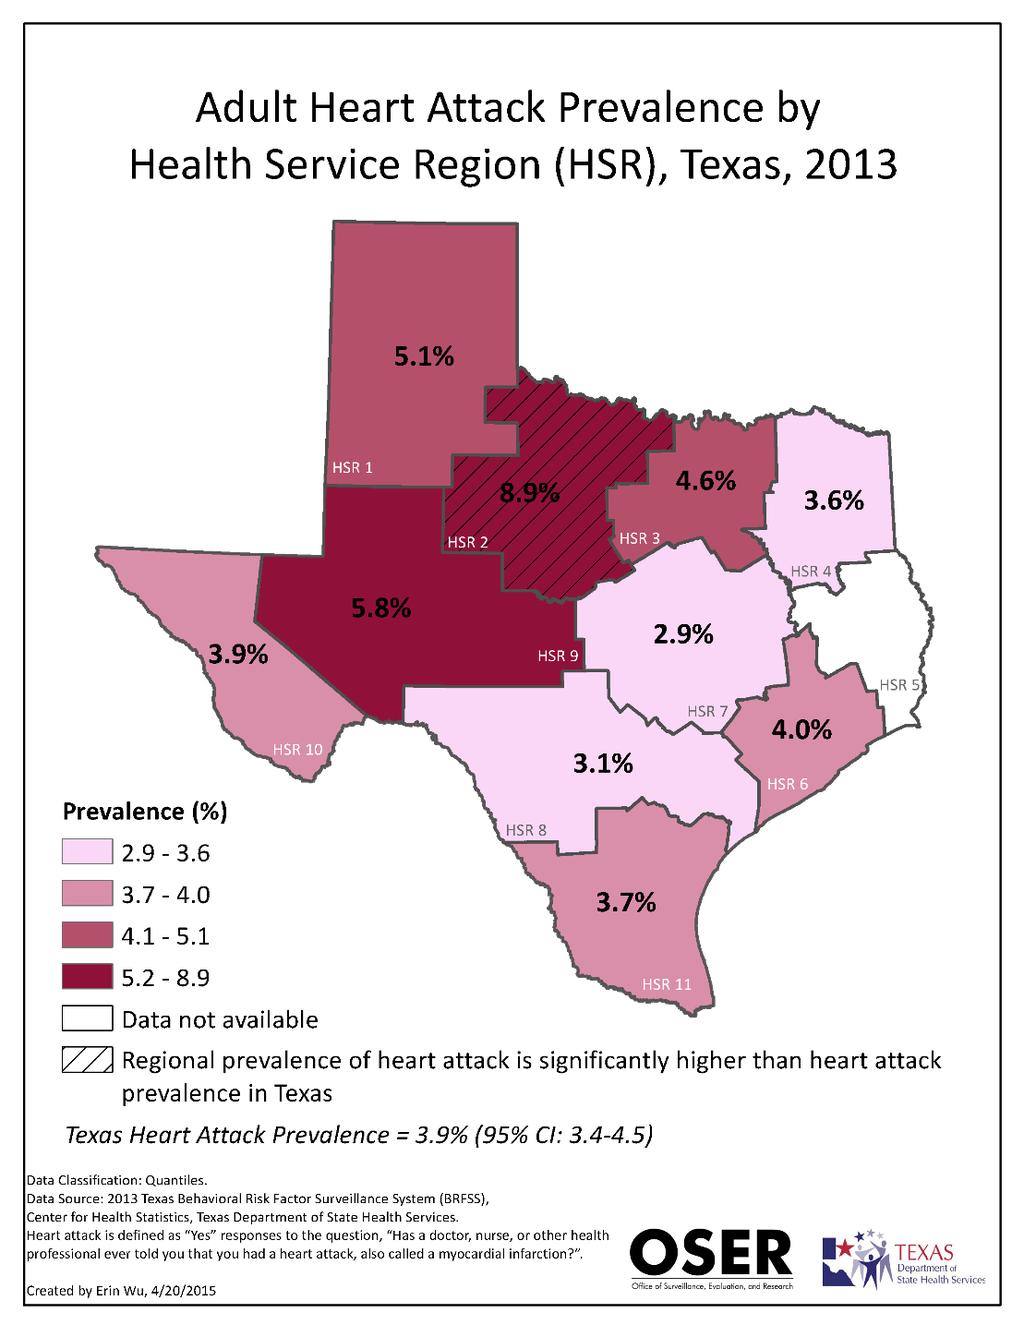 Heart Attack Prevalence Heart attack prevalence among adults in Texas: 3.